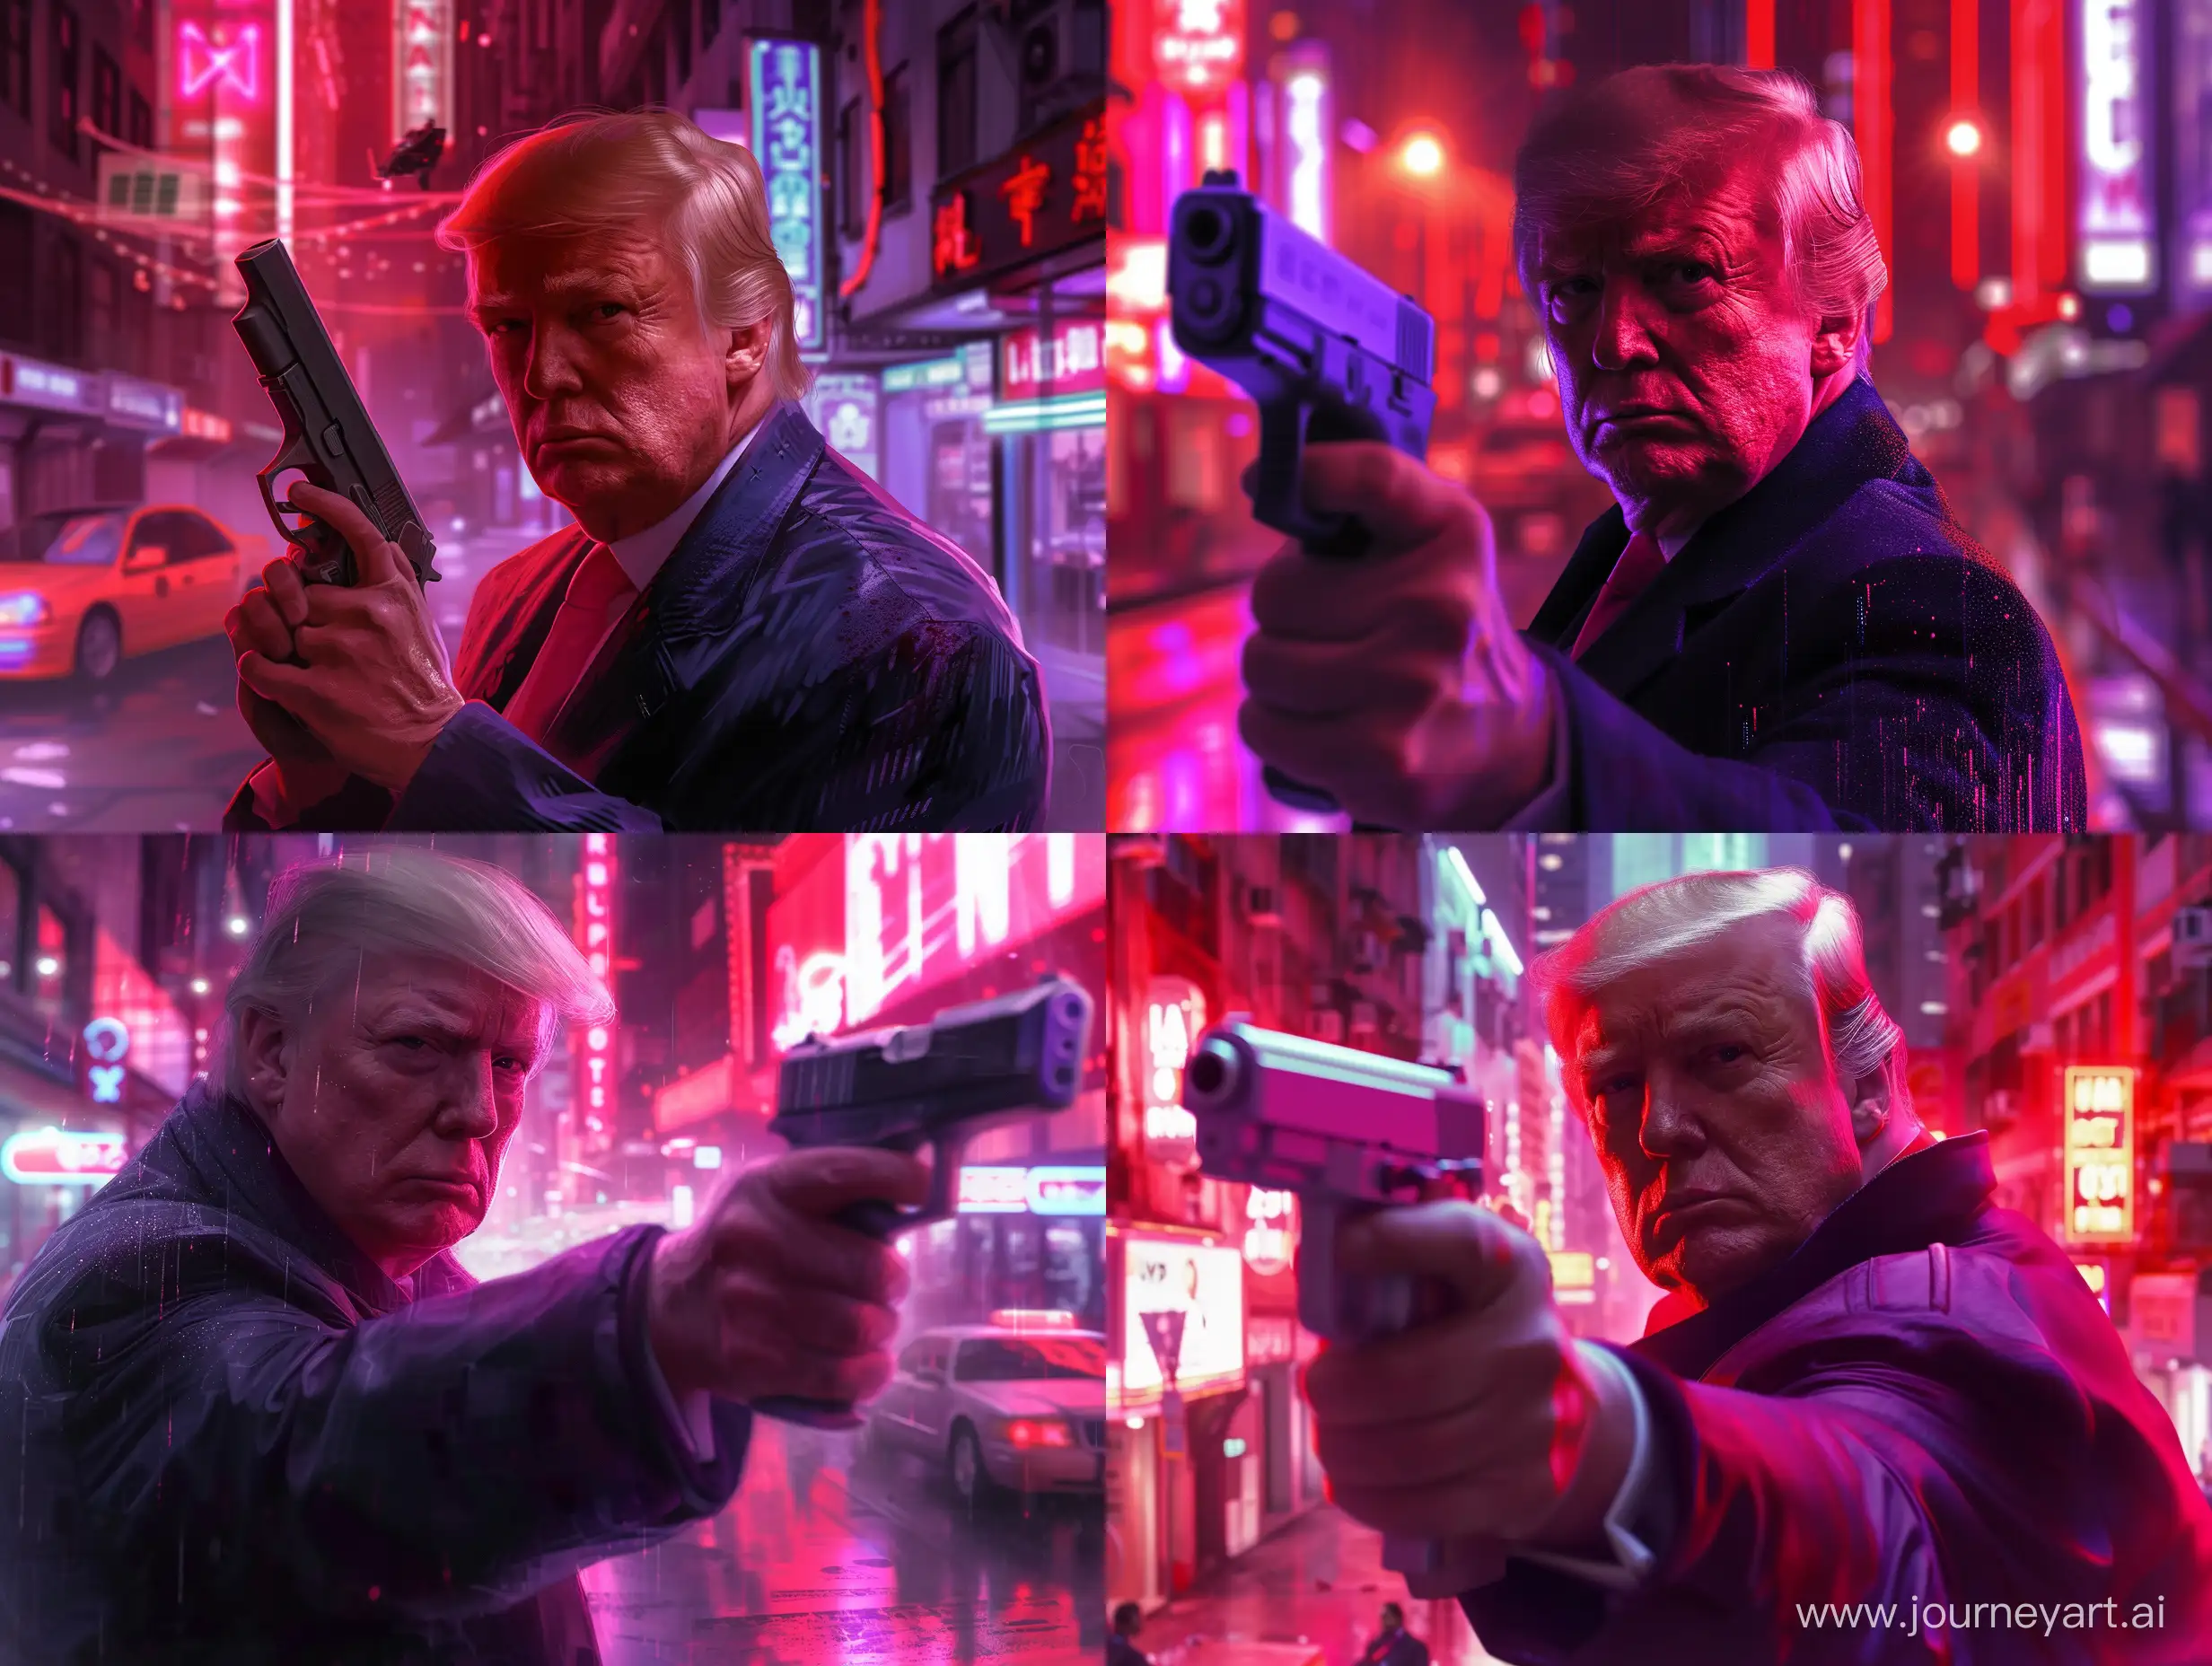 Donald-Trump-in-Cypertown-Futuristic-Neon-Vigilante-with-a-Powerful-Stance